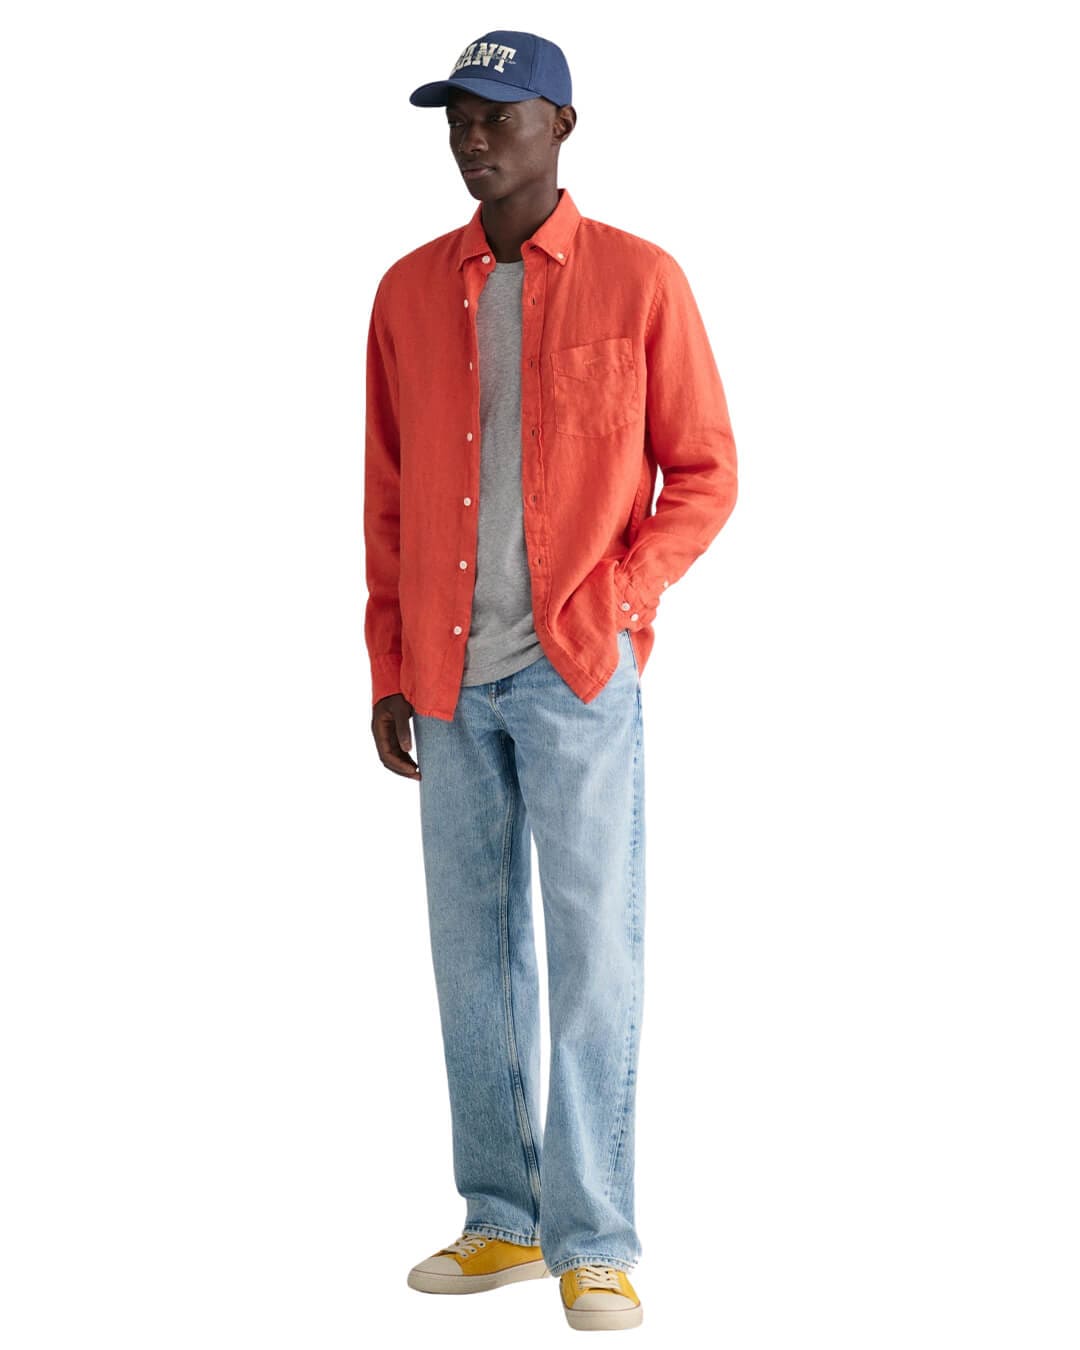 Gant Shirts Gant Regular Fit Orange Garment-Dyed Linen Shirt